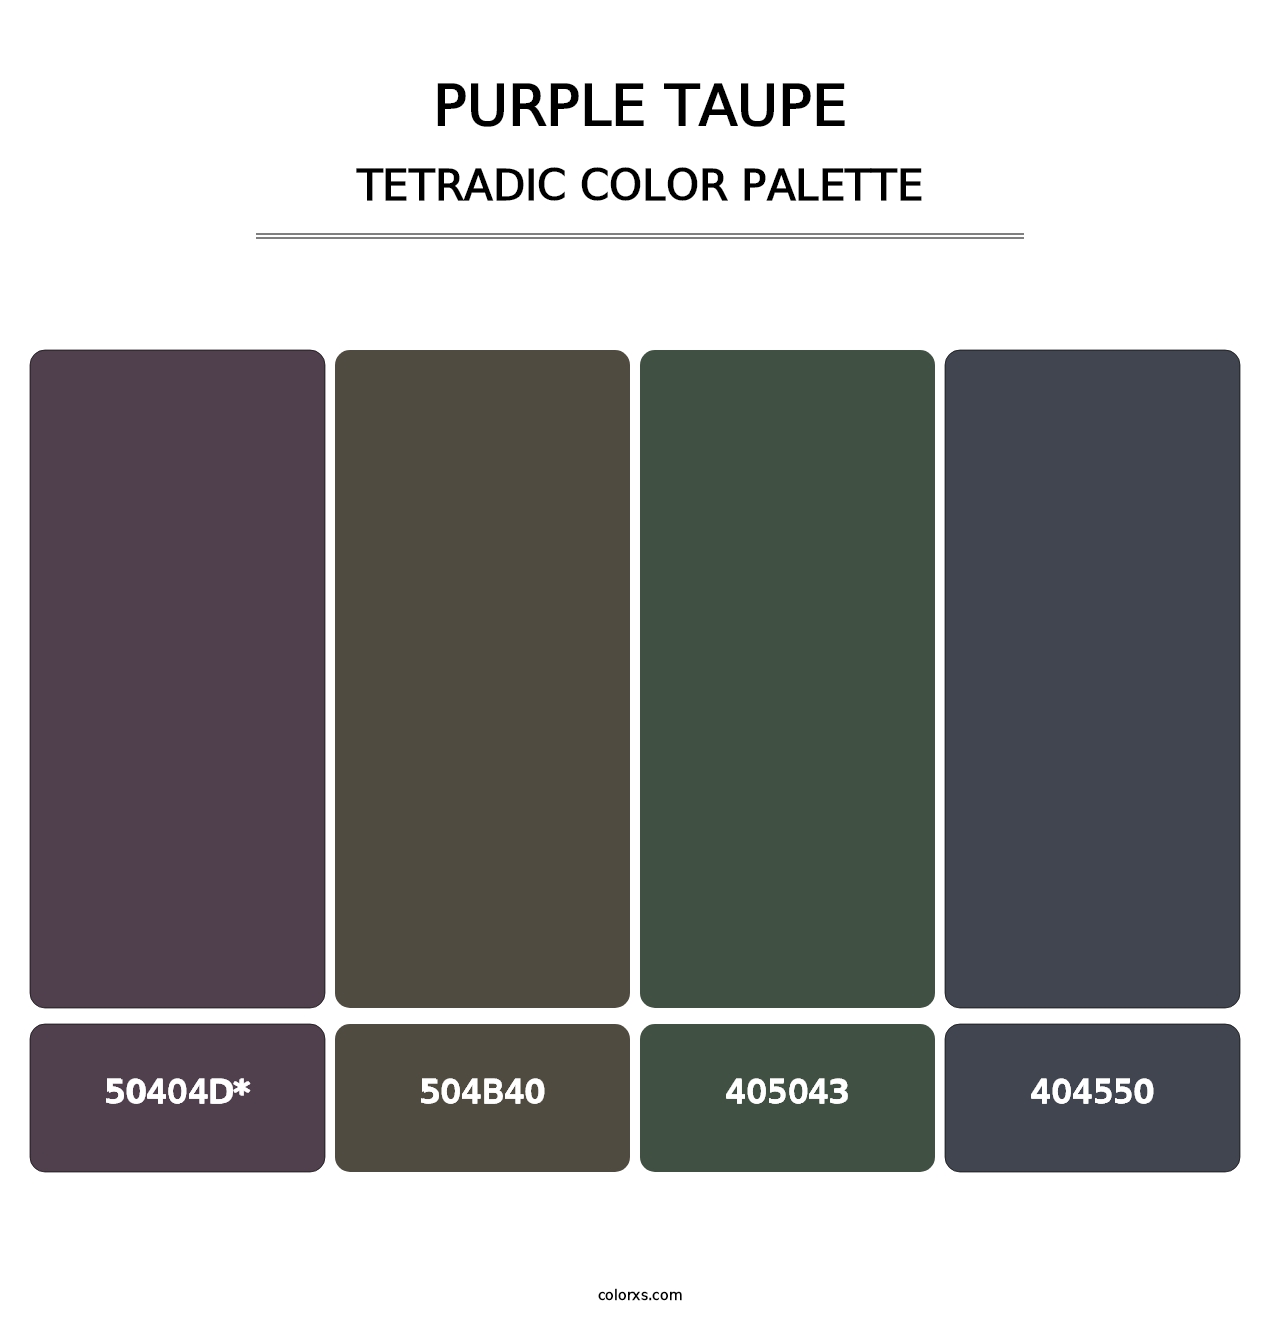 Purple Taupe - Tetradic Color Palette